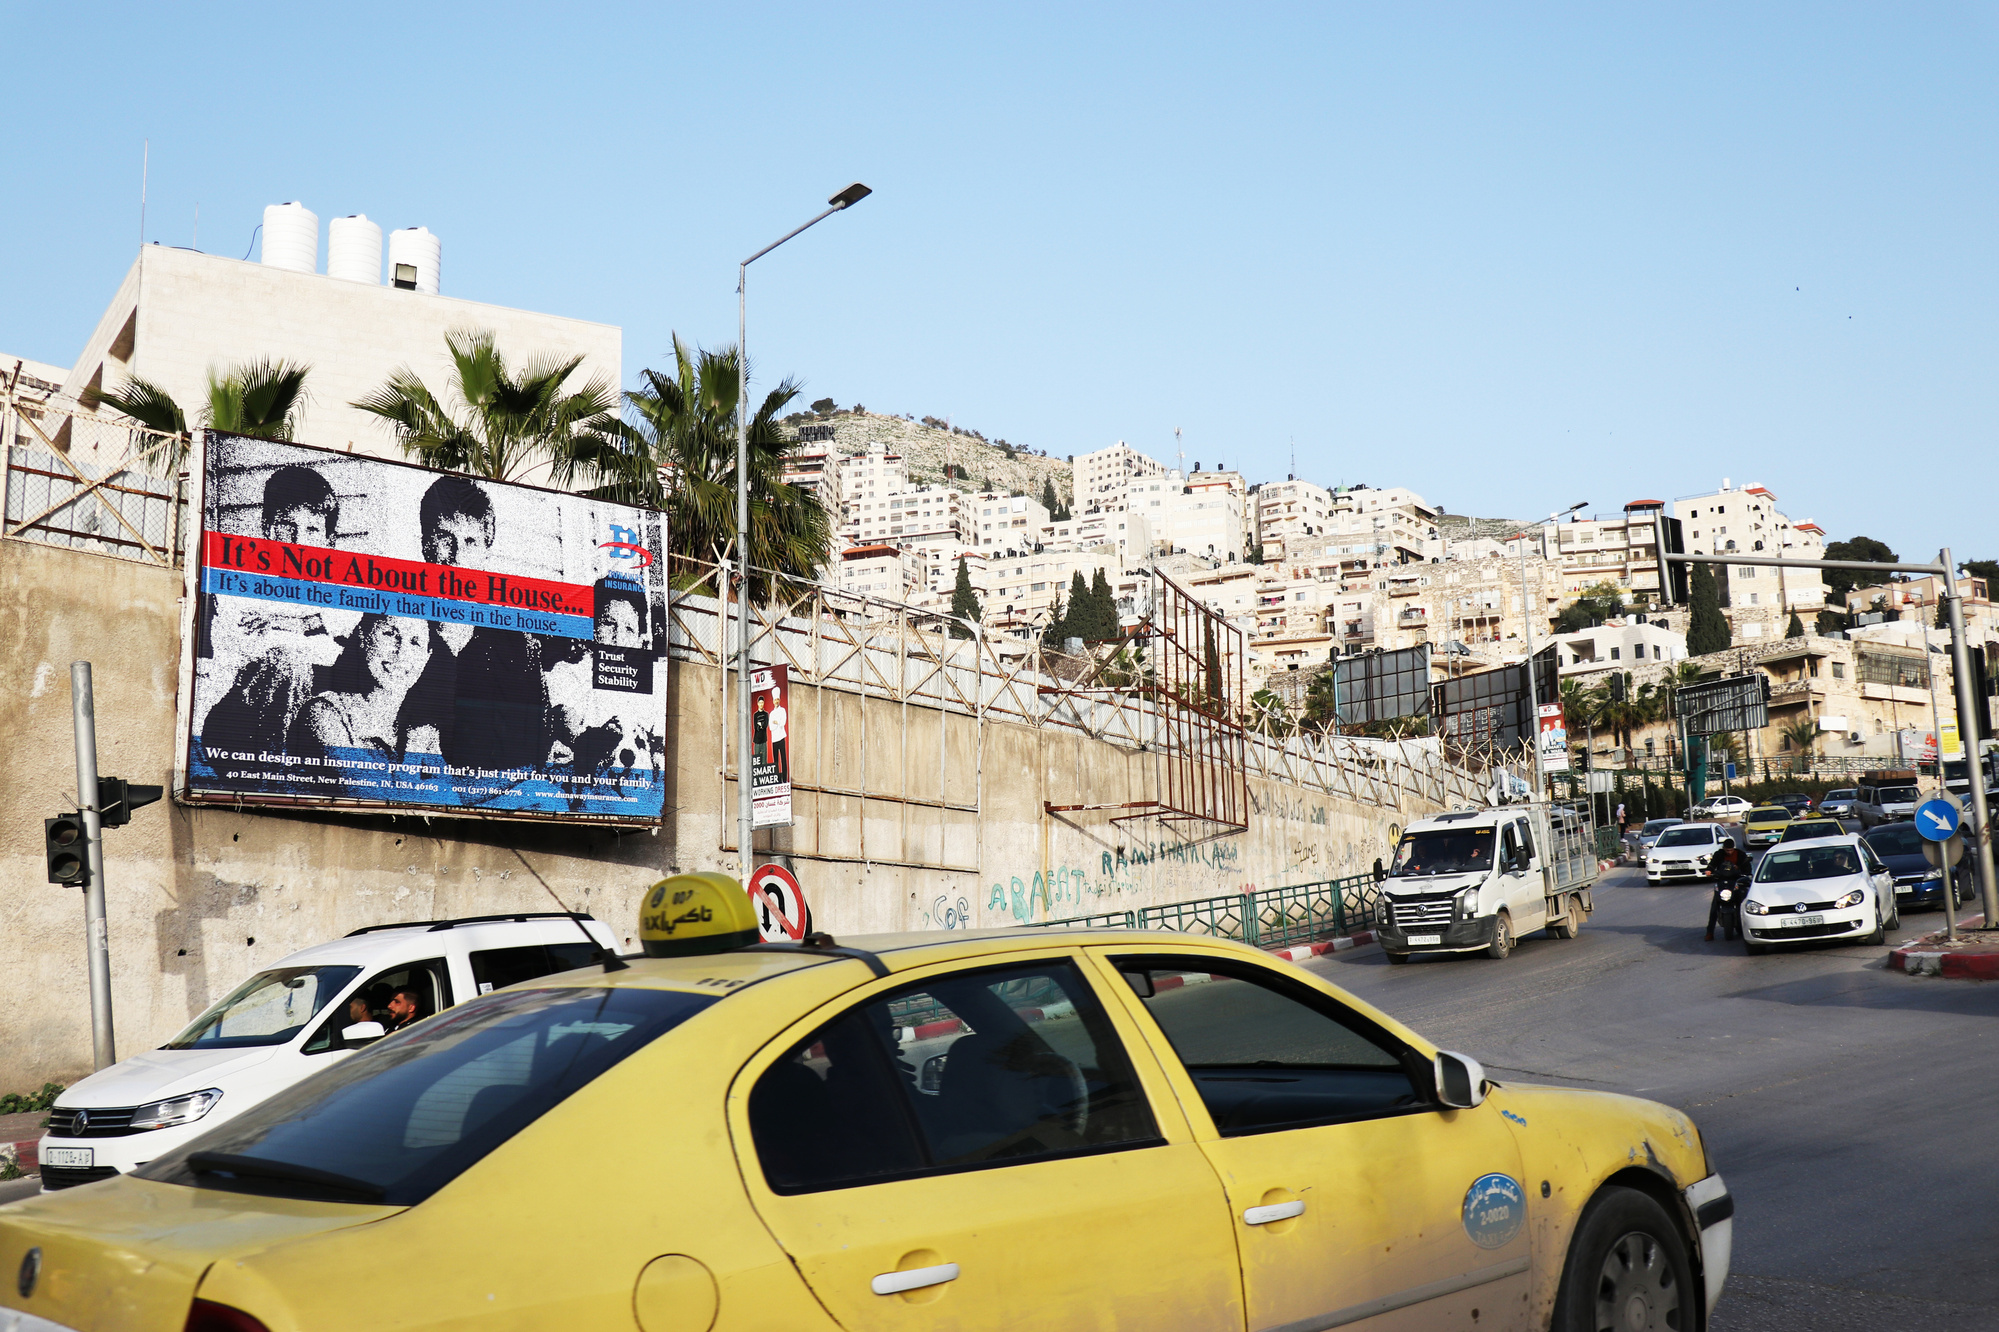 Billboard in Nablus, Palestine 2019